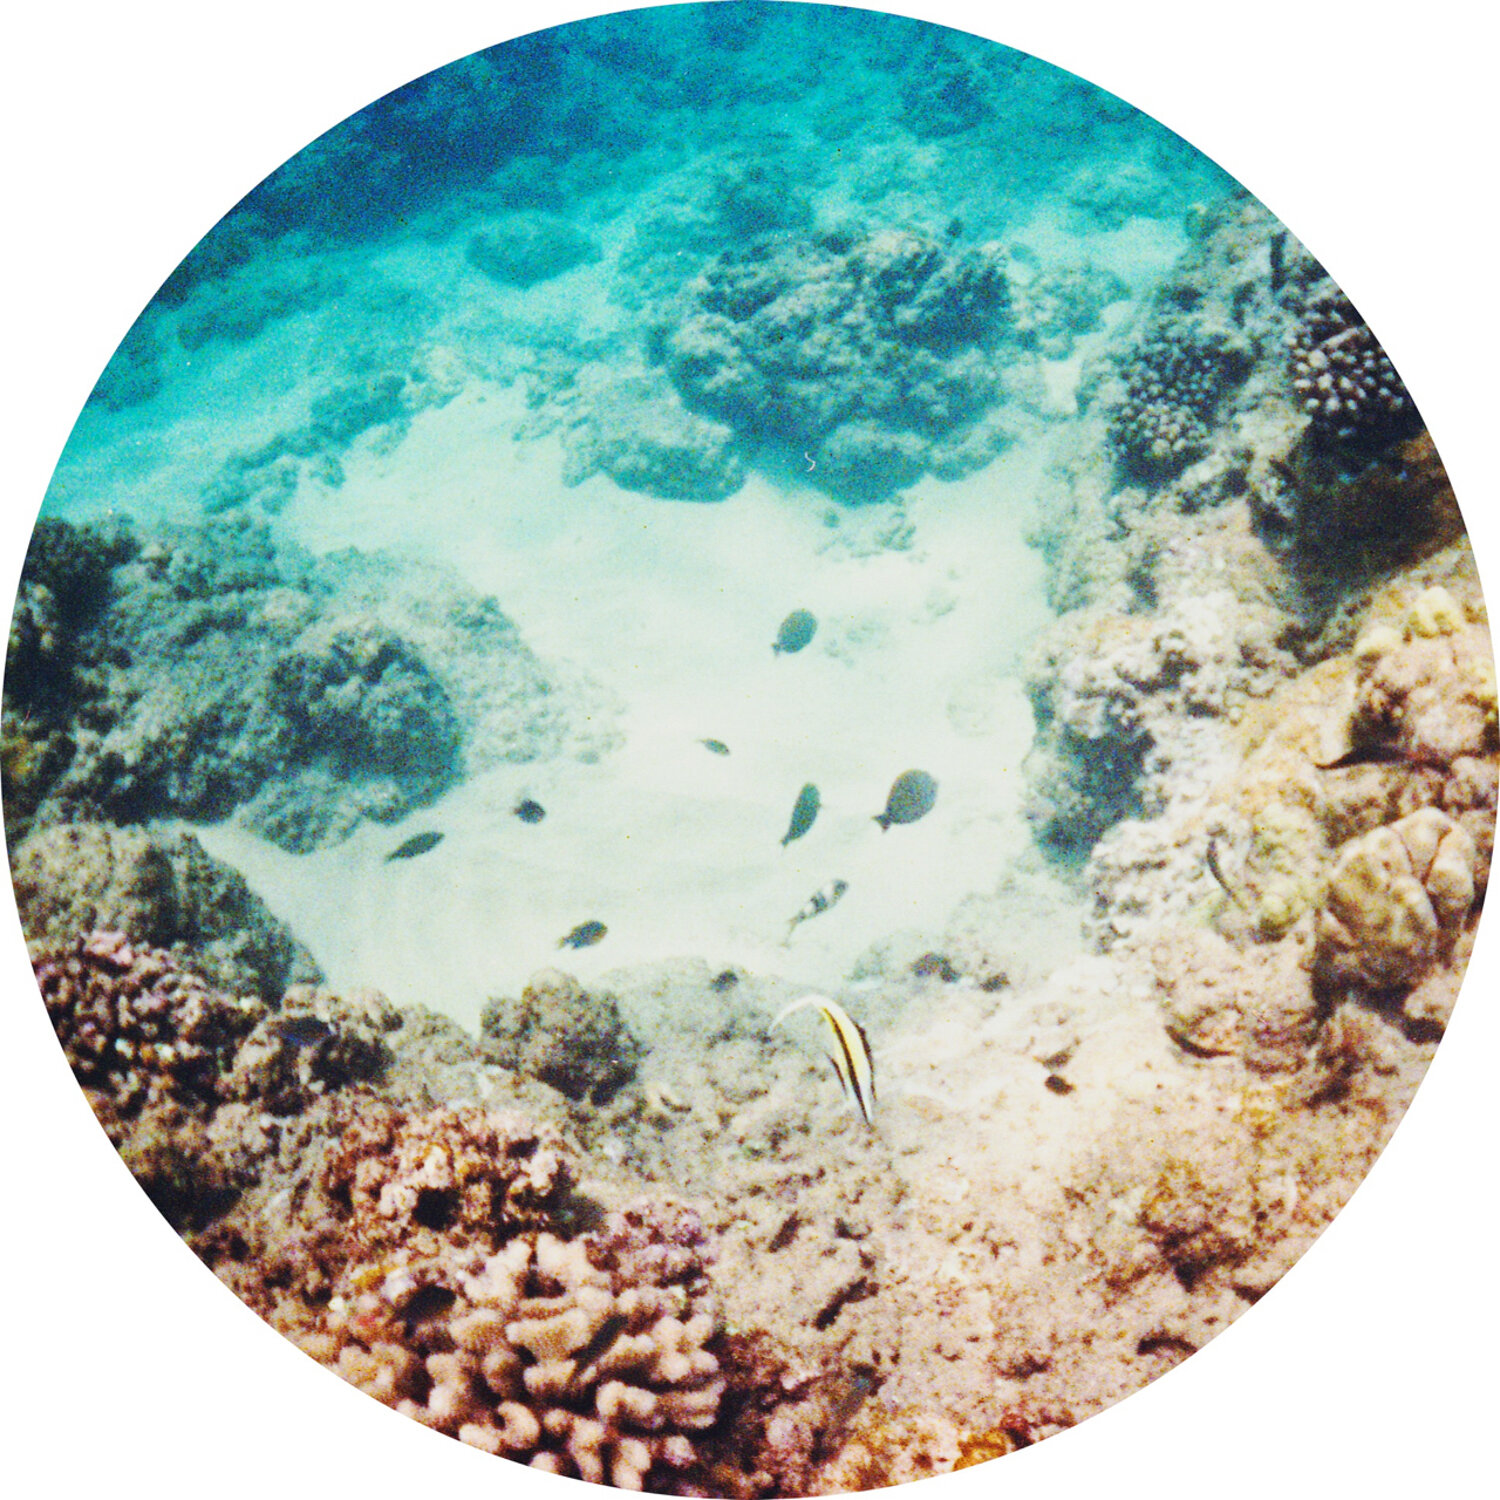 lifestyle nature photography photographer krista espino travel underwater swim ocean analog film 35mm polaroid kauai island hawaii-17.jpg